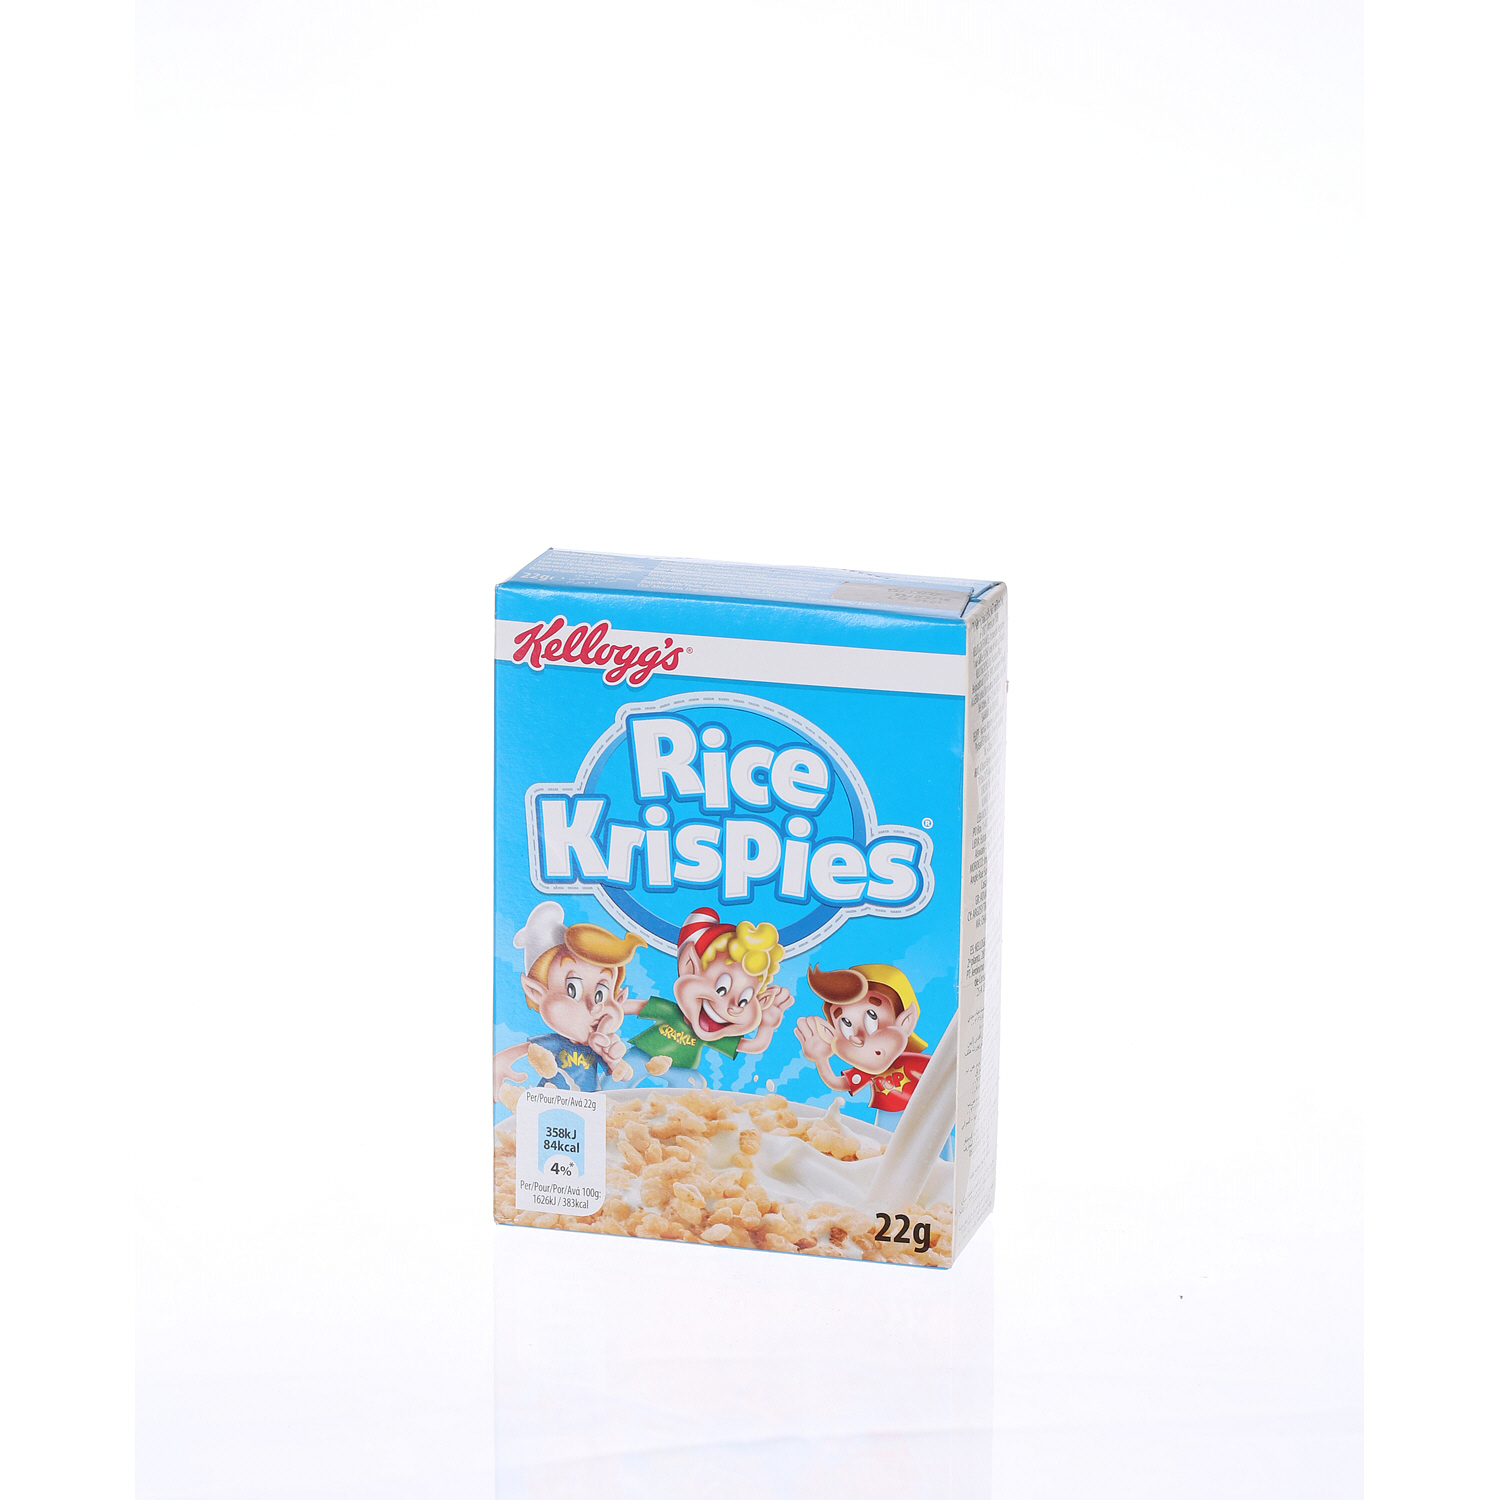 Kellogg's Rice Krispies 22 g